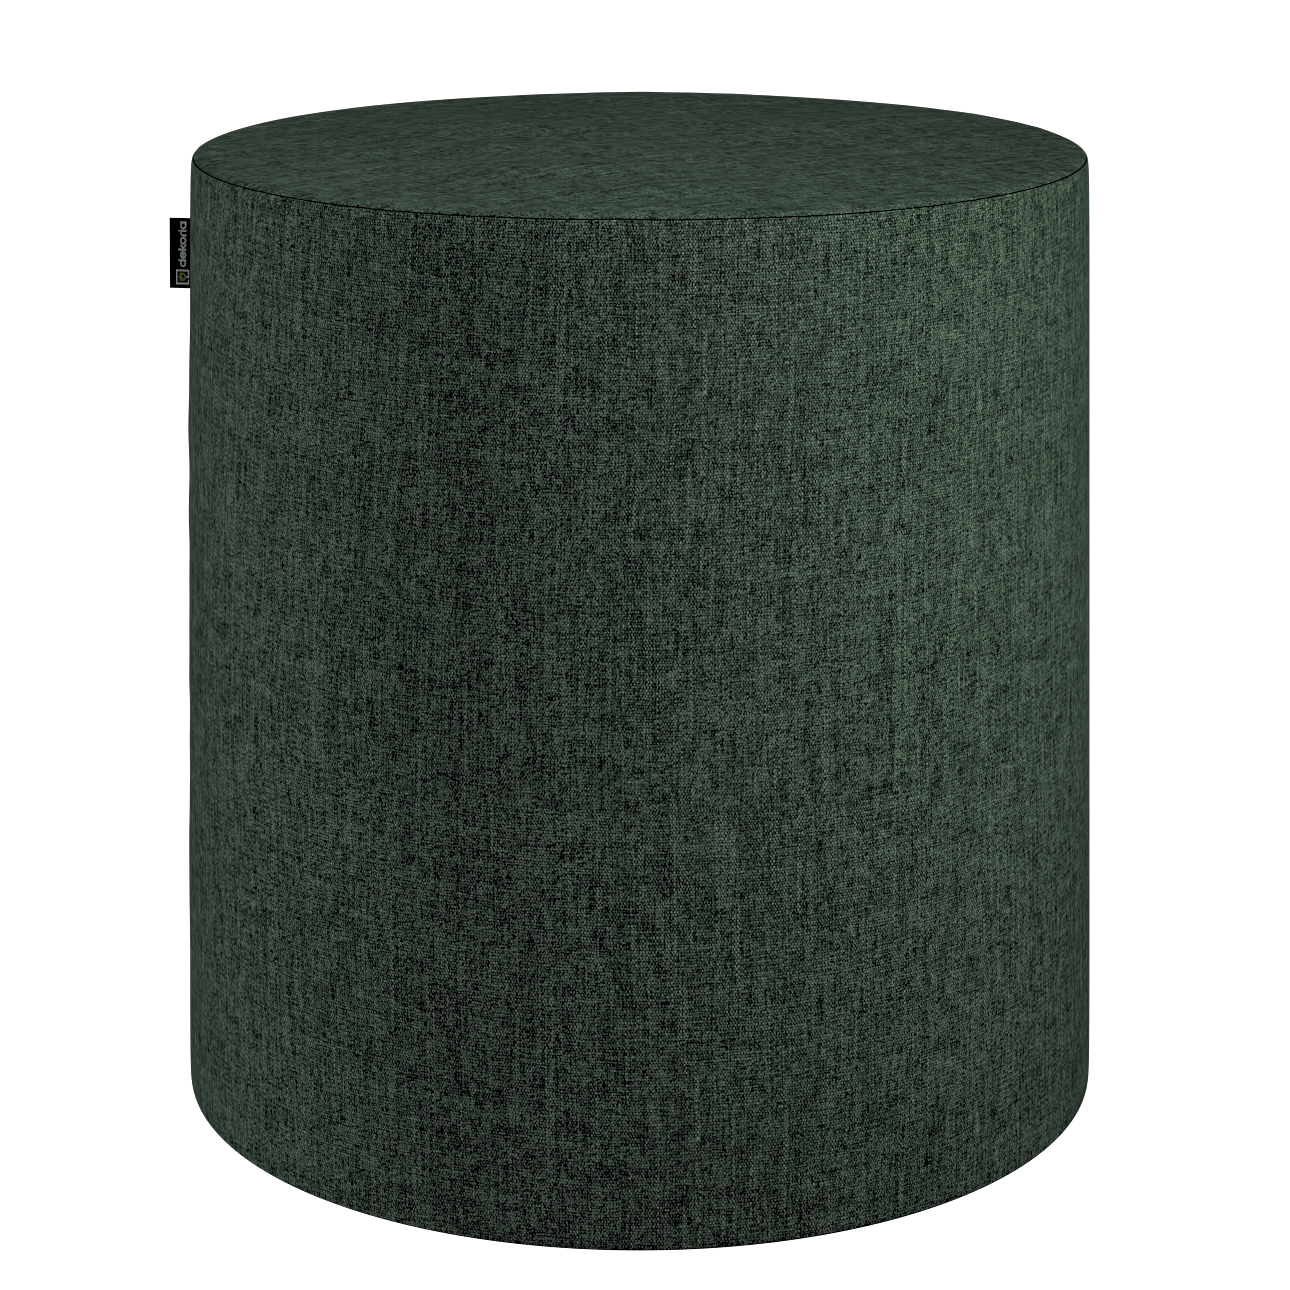 Pouf Barrel, dunkelgrün, ø40 cm x 40 cm, City (704-81) günstig online kaufen